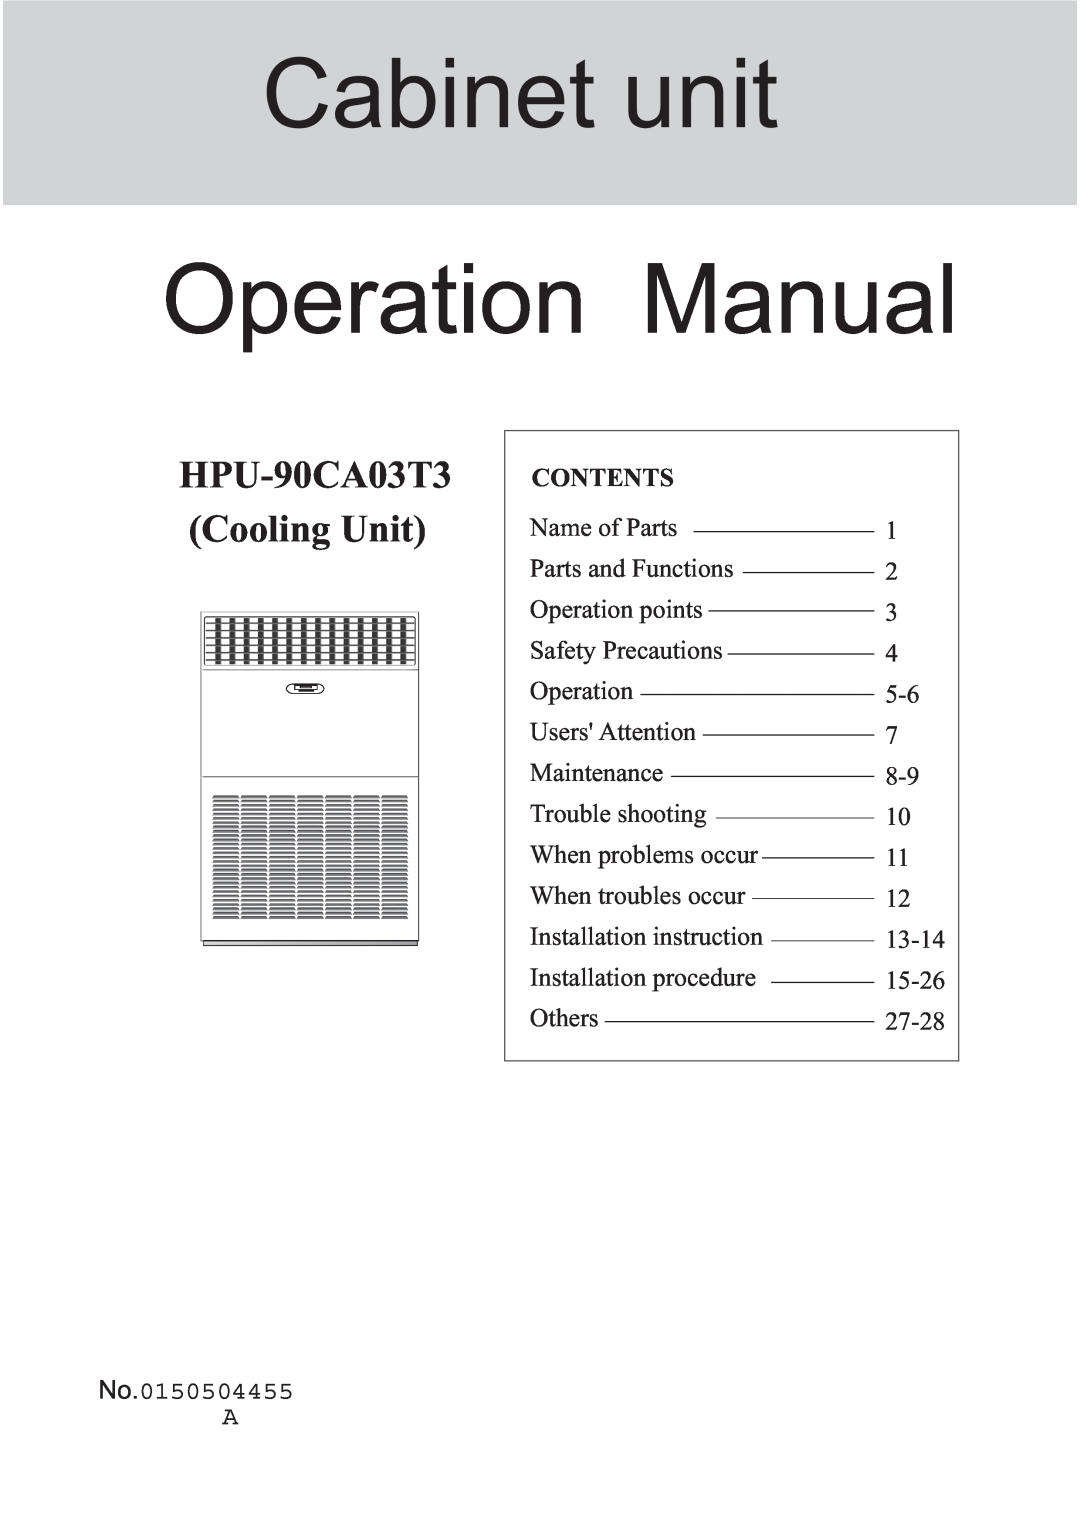 Haier operation manual HPU-90CA03T3Cooling Unit, No.0150504455 A 